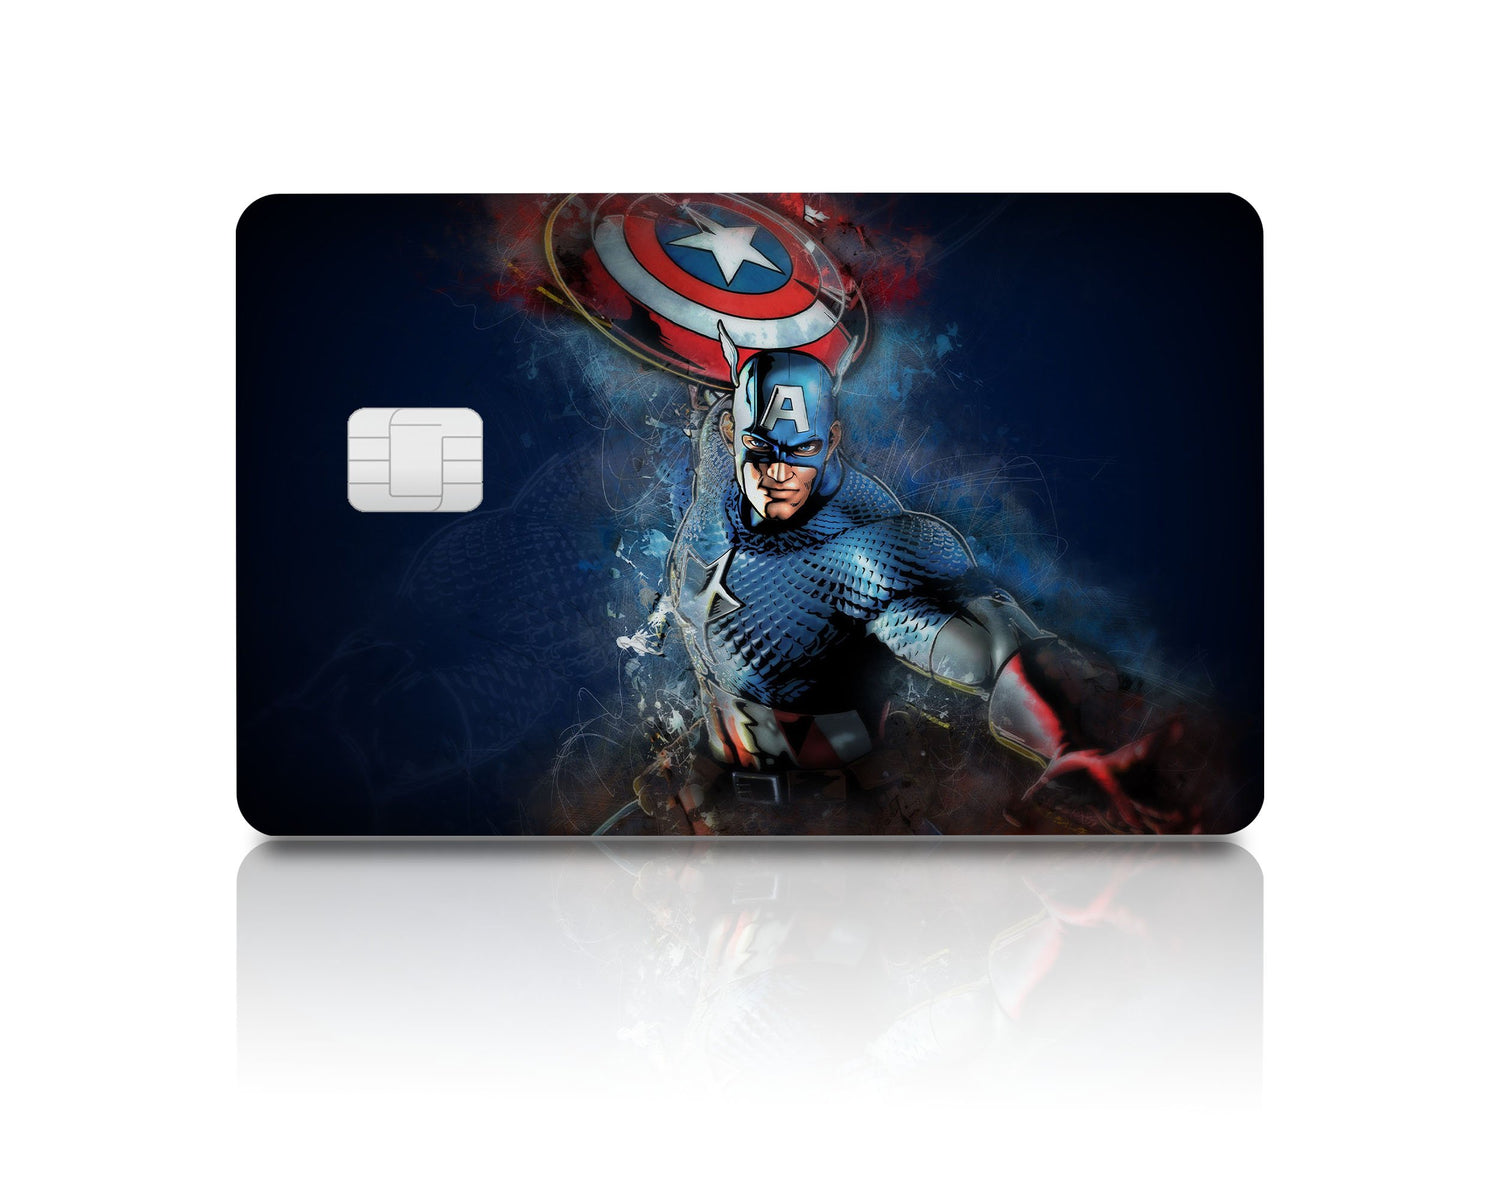 Flex Designs Credit Card Captain America Full Skins - Superhero Marvel & Debit Card Skin